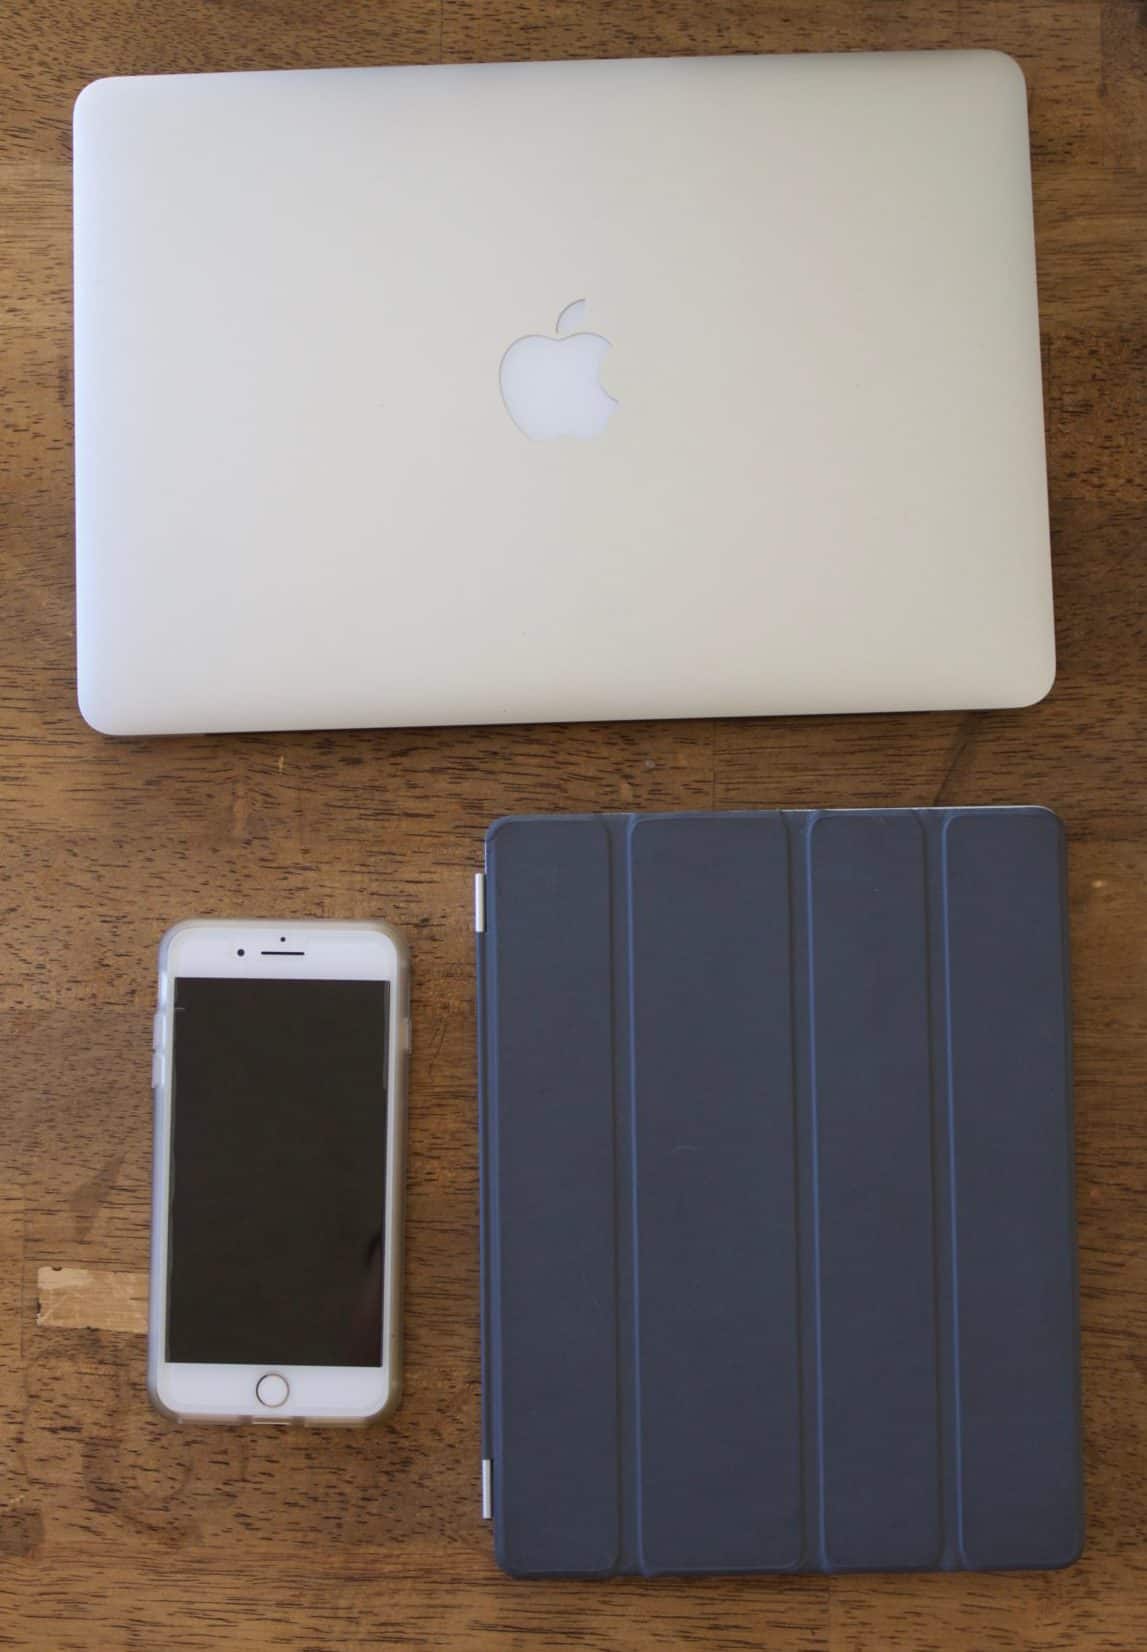 Laptop, phone and ipad.